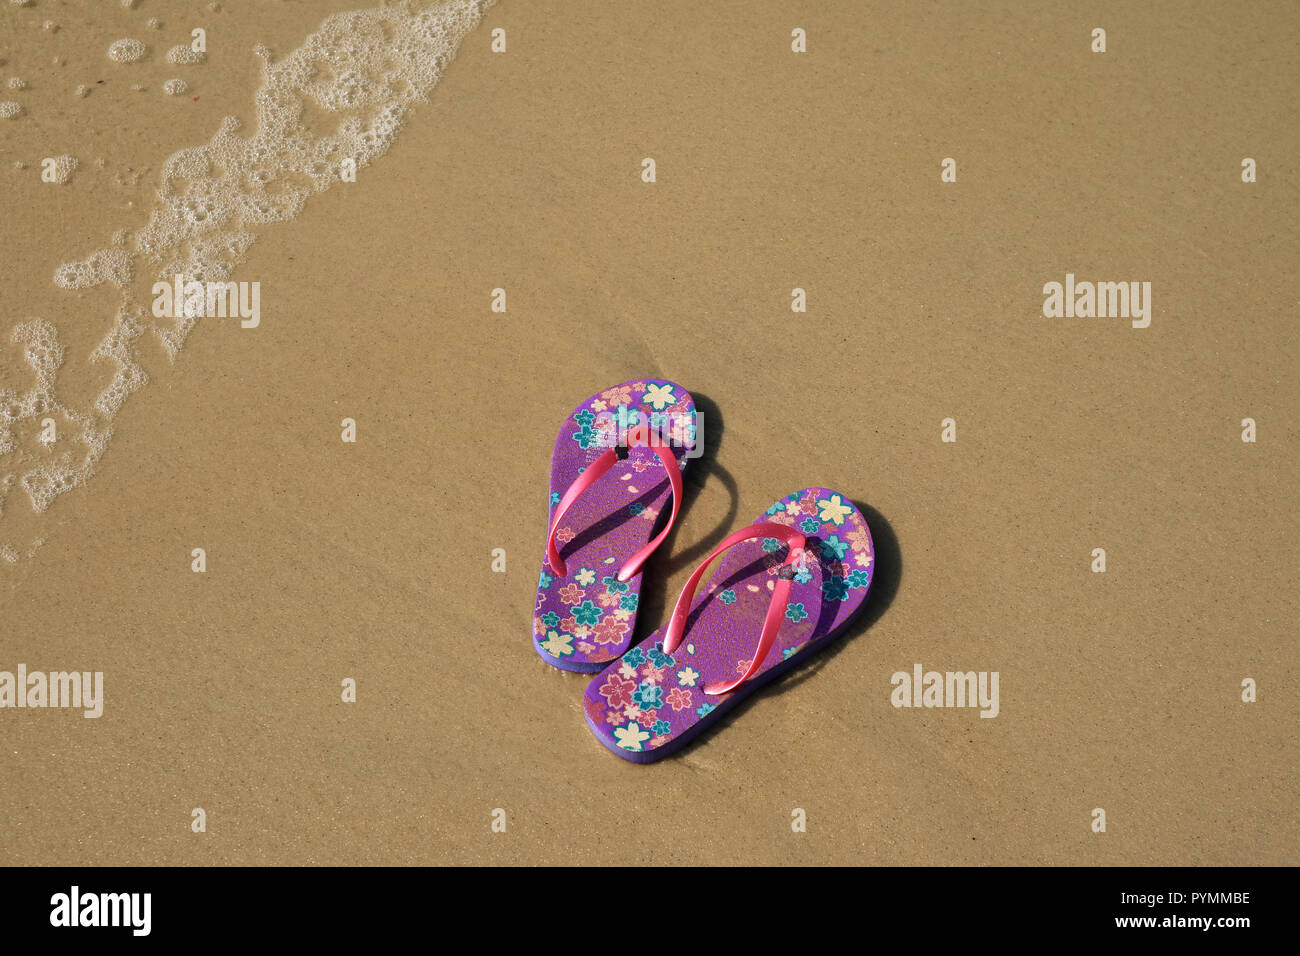 A pair of vibrant purple flip-flops sandals on the sandy beach with the  wave swash, Copacabana beach, Brazil Stock Photo - Alamy